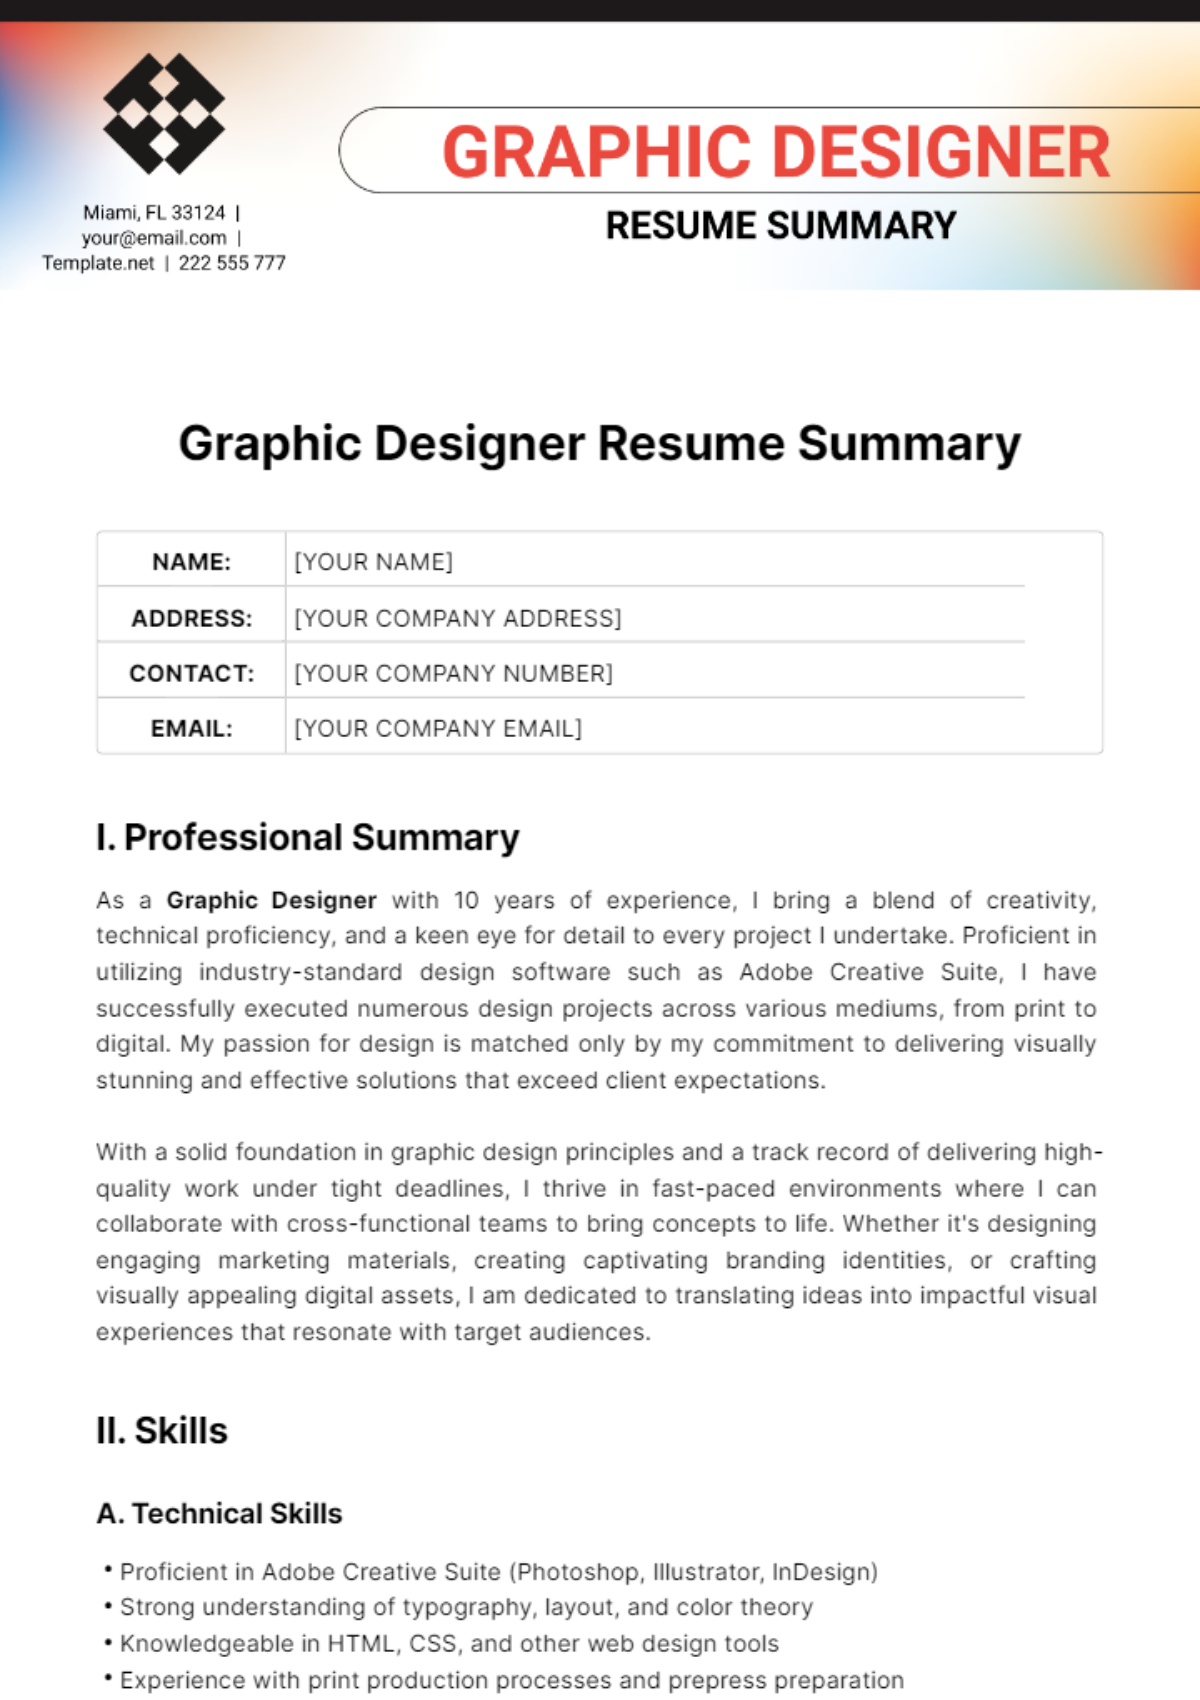 Graphic Designer Resume Summary Template